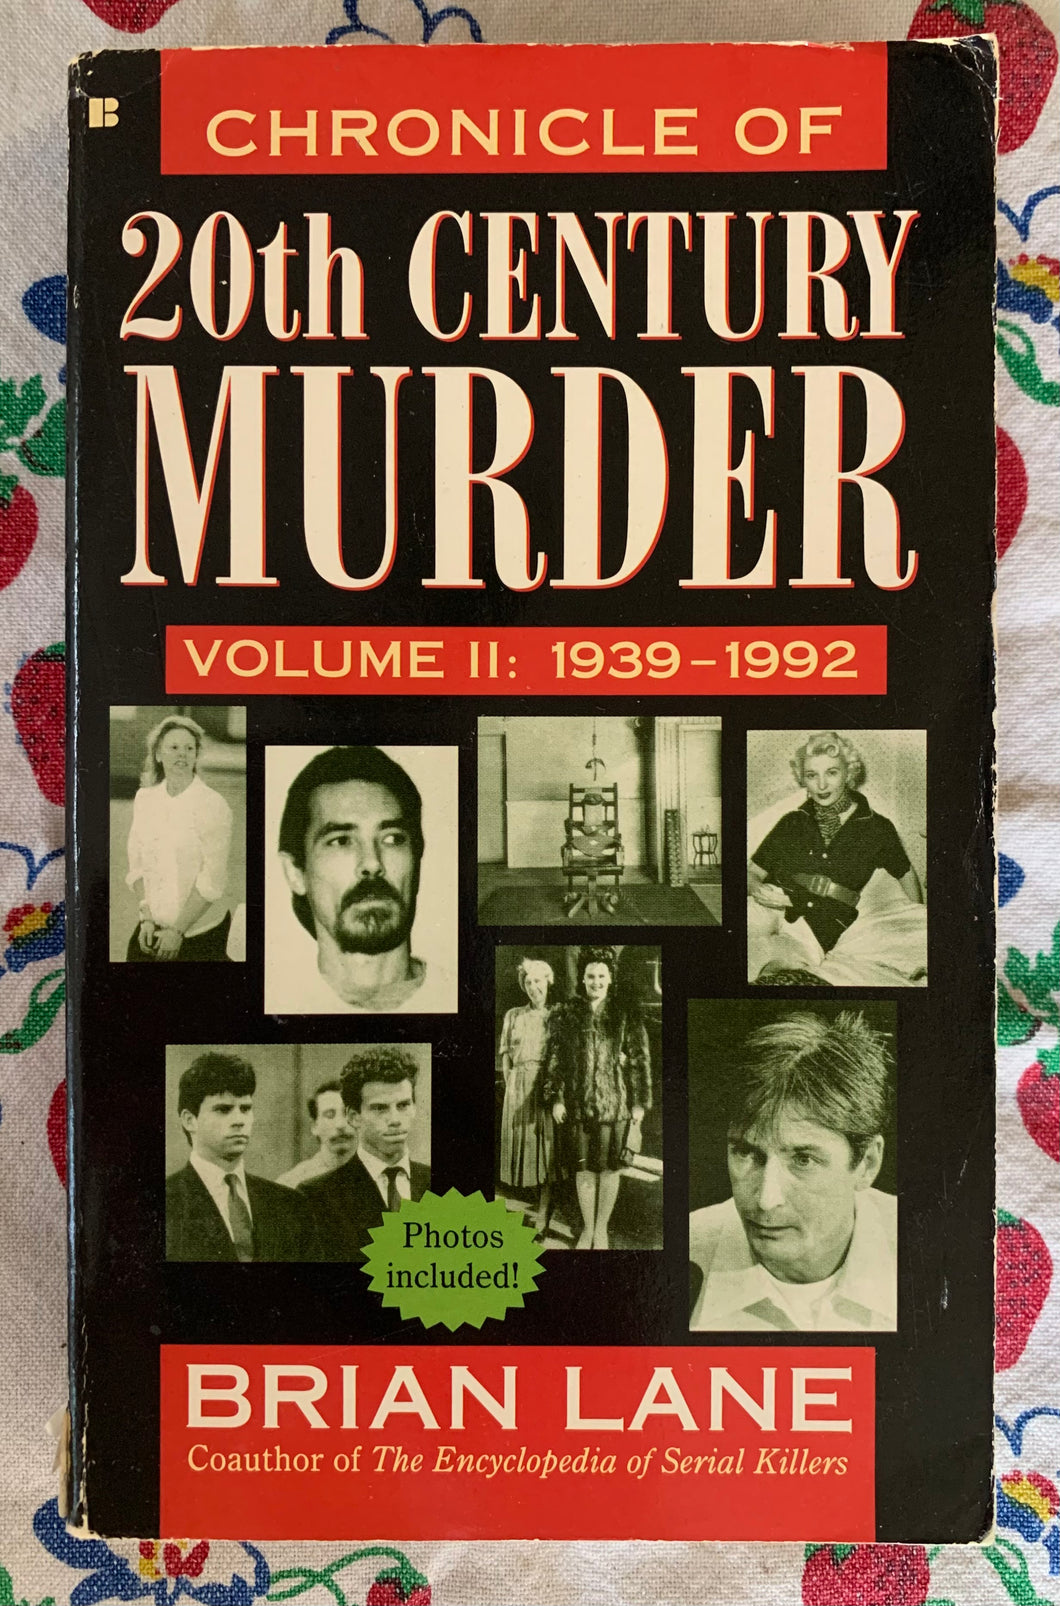 Chronicle Of 20th Century Murder Volume II: 1939-1992